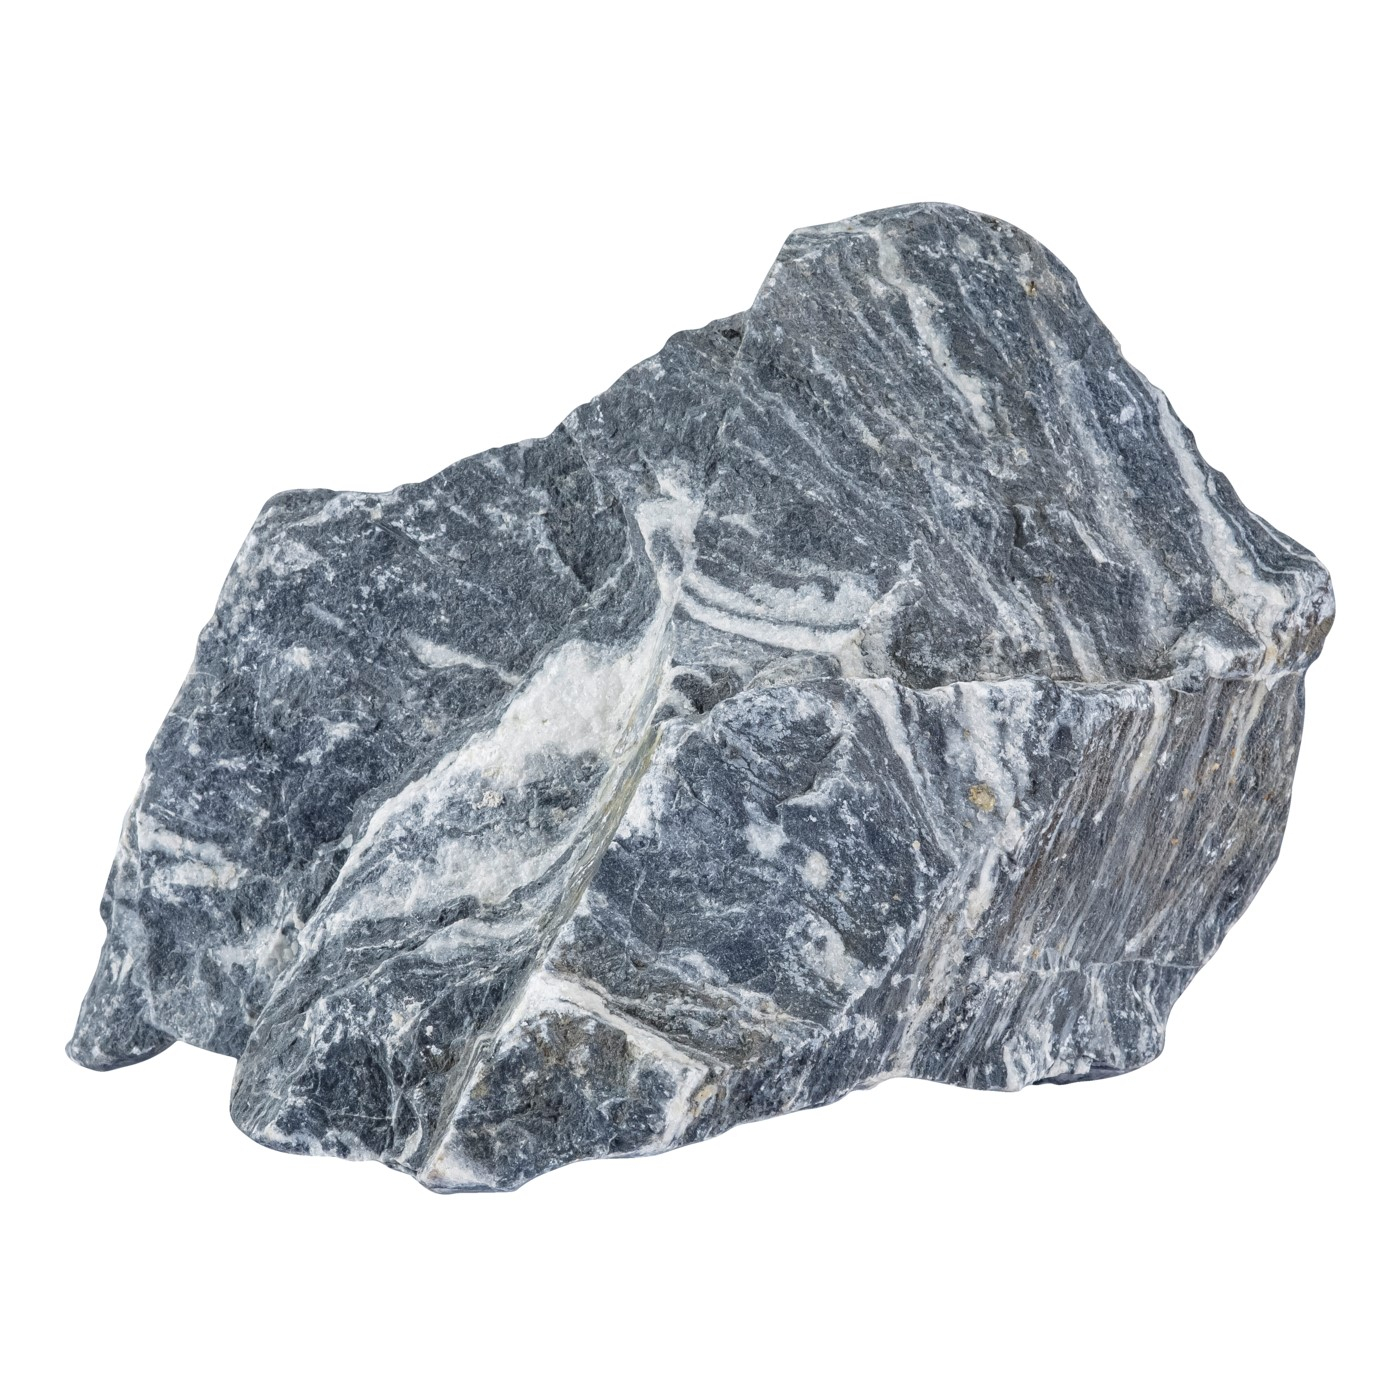 Sera Rock Zebra Stone Rocha natural cinzenta e branca para aquascaping